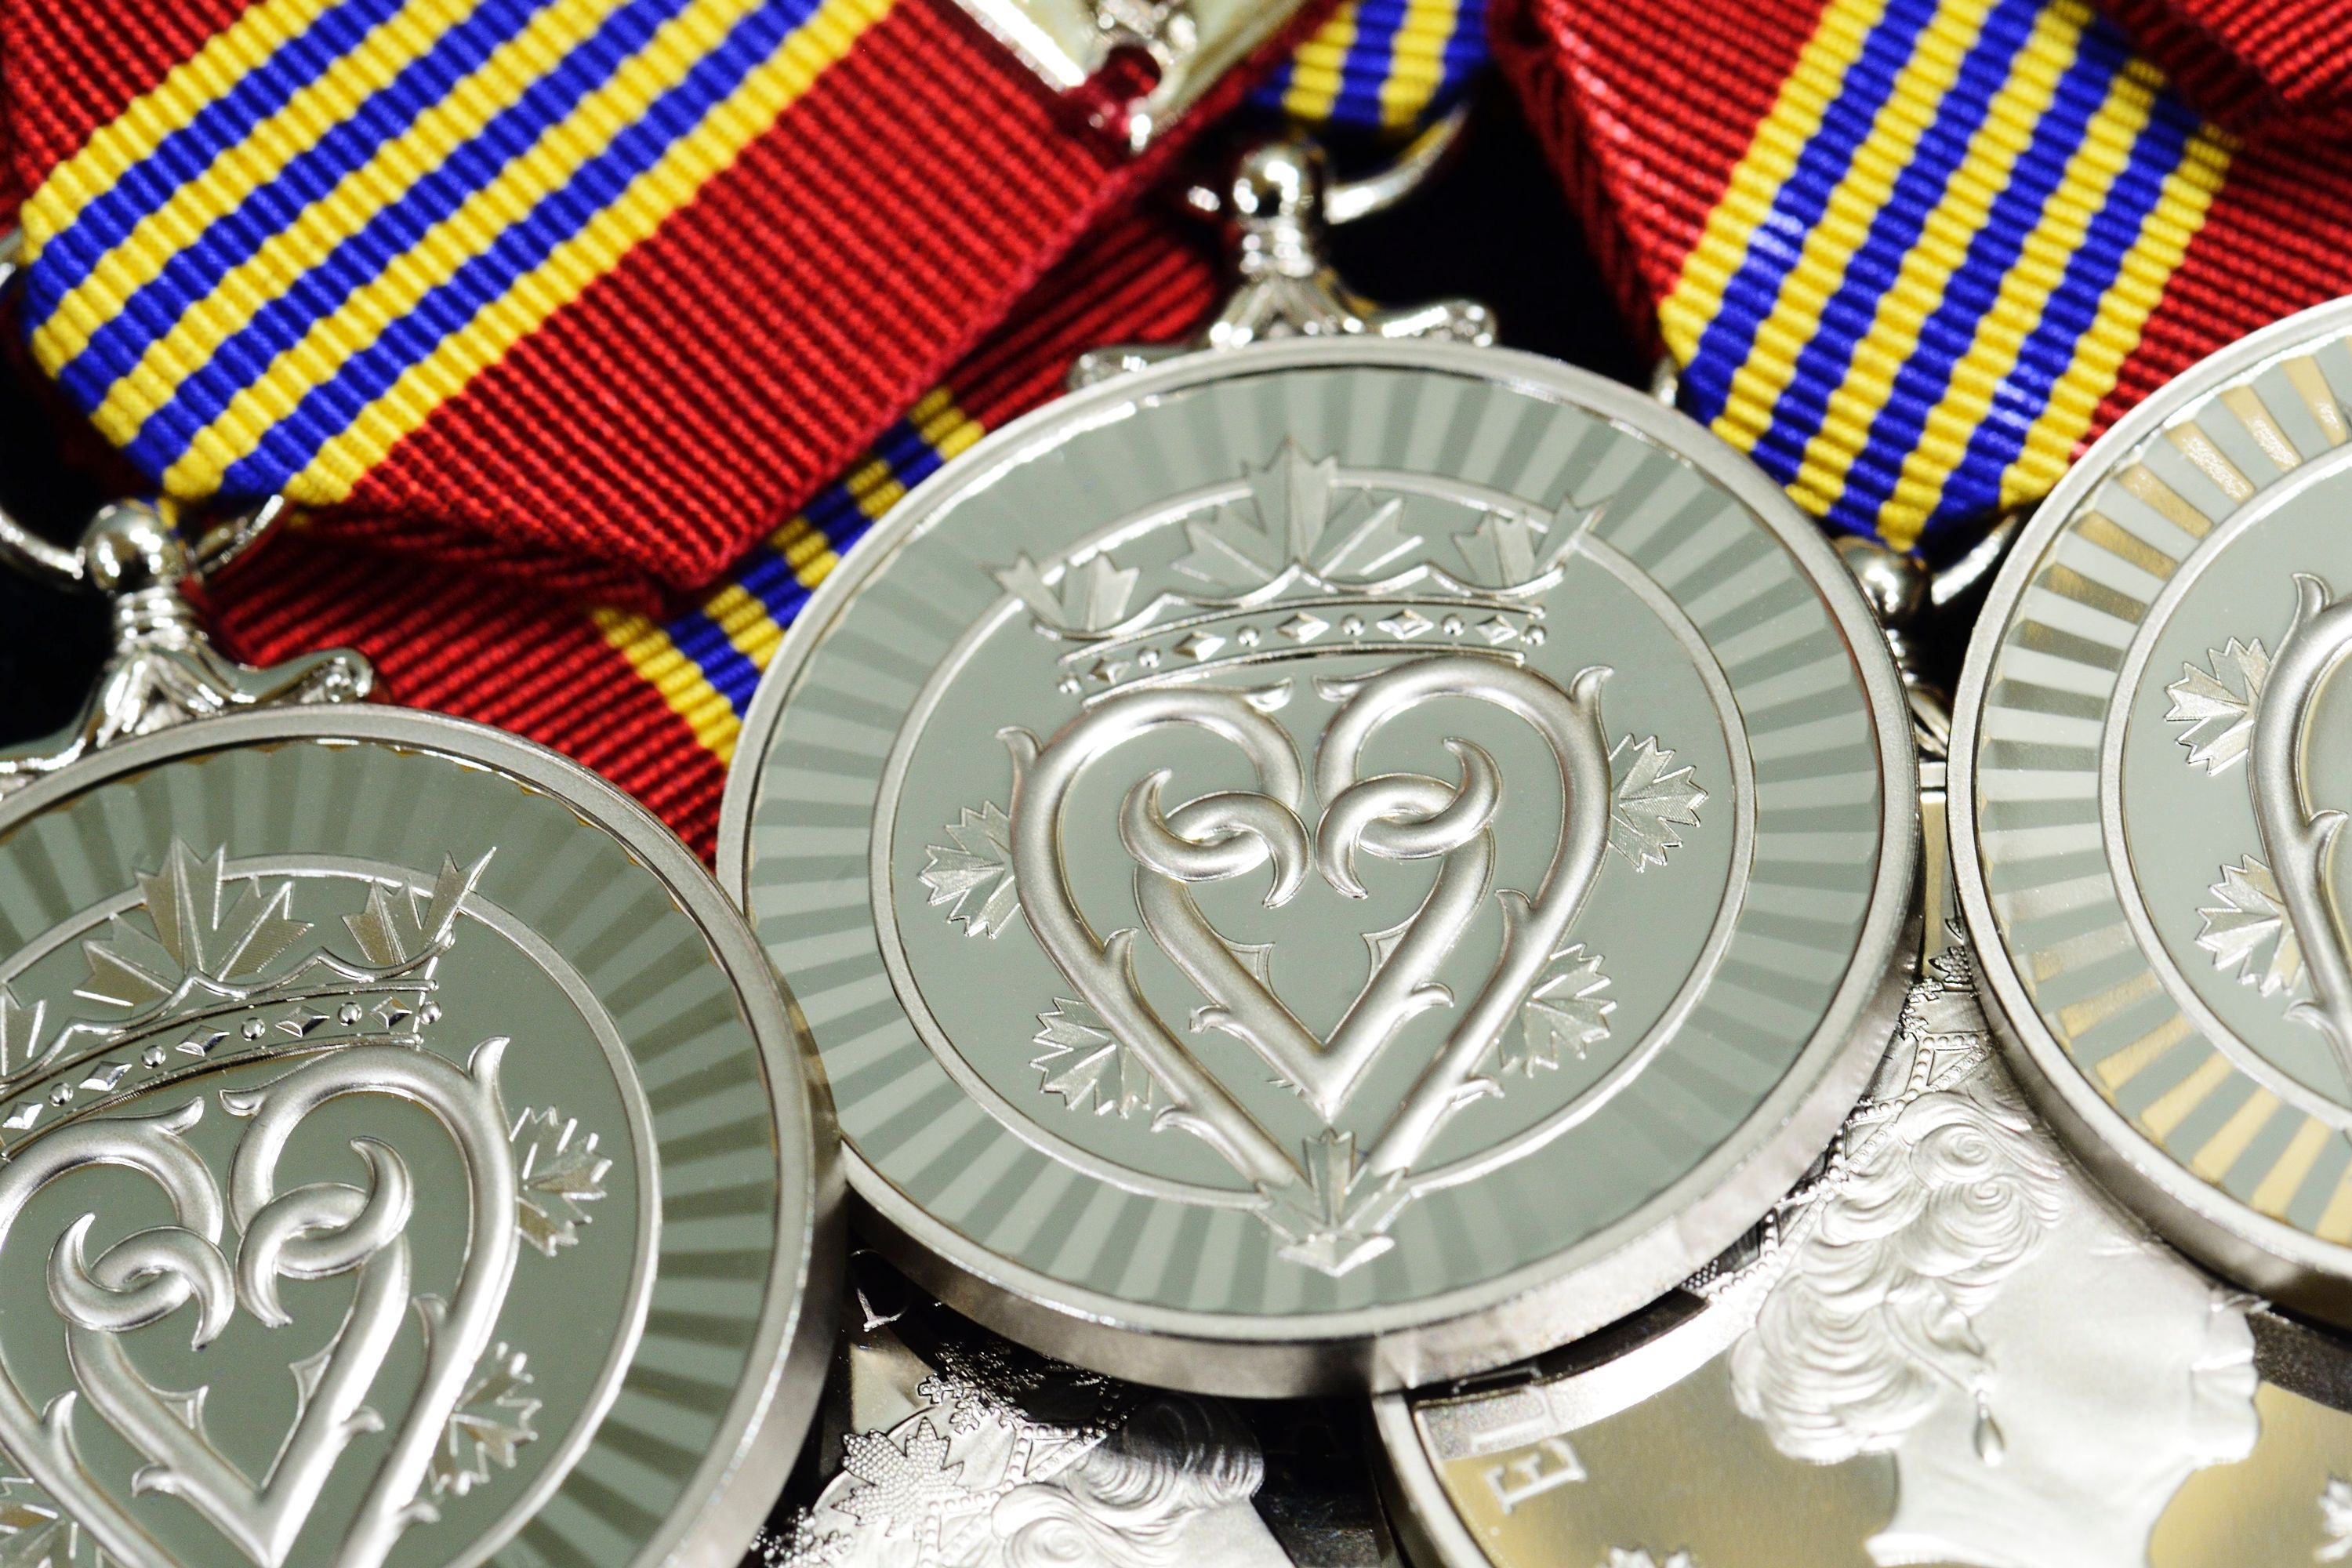 Sovereign’s Medal for Volunteers Honours Service of Alberta Community Leaders